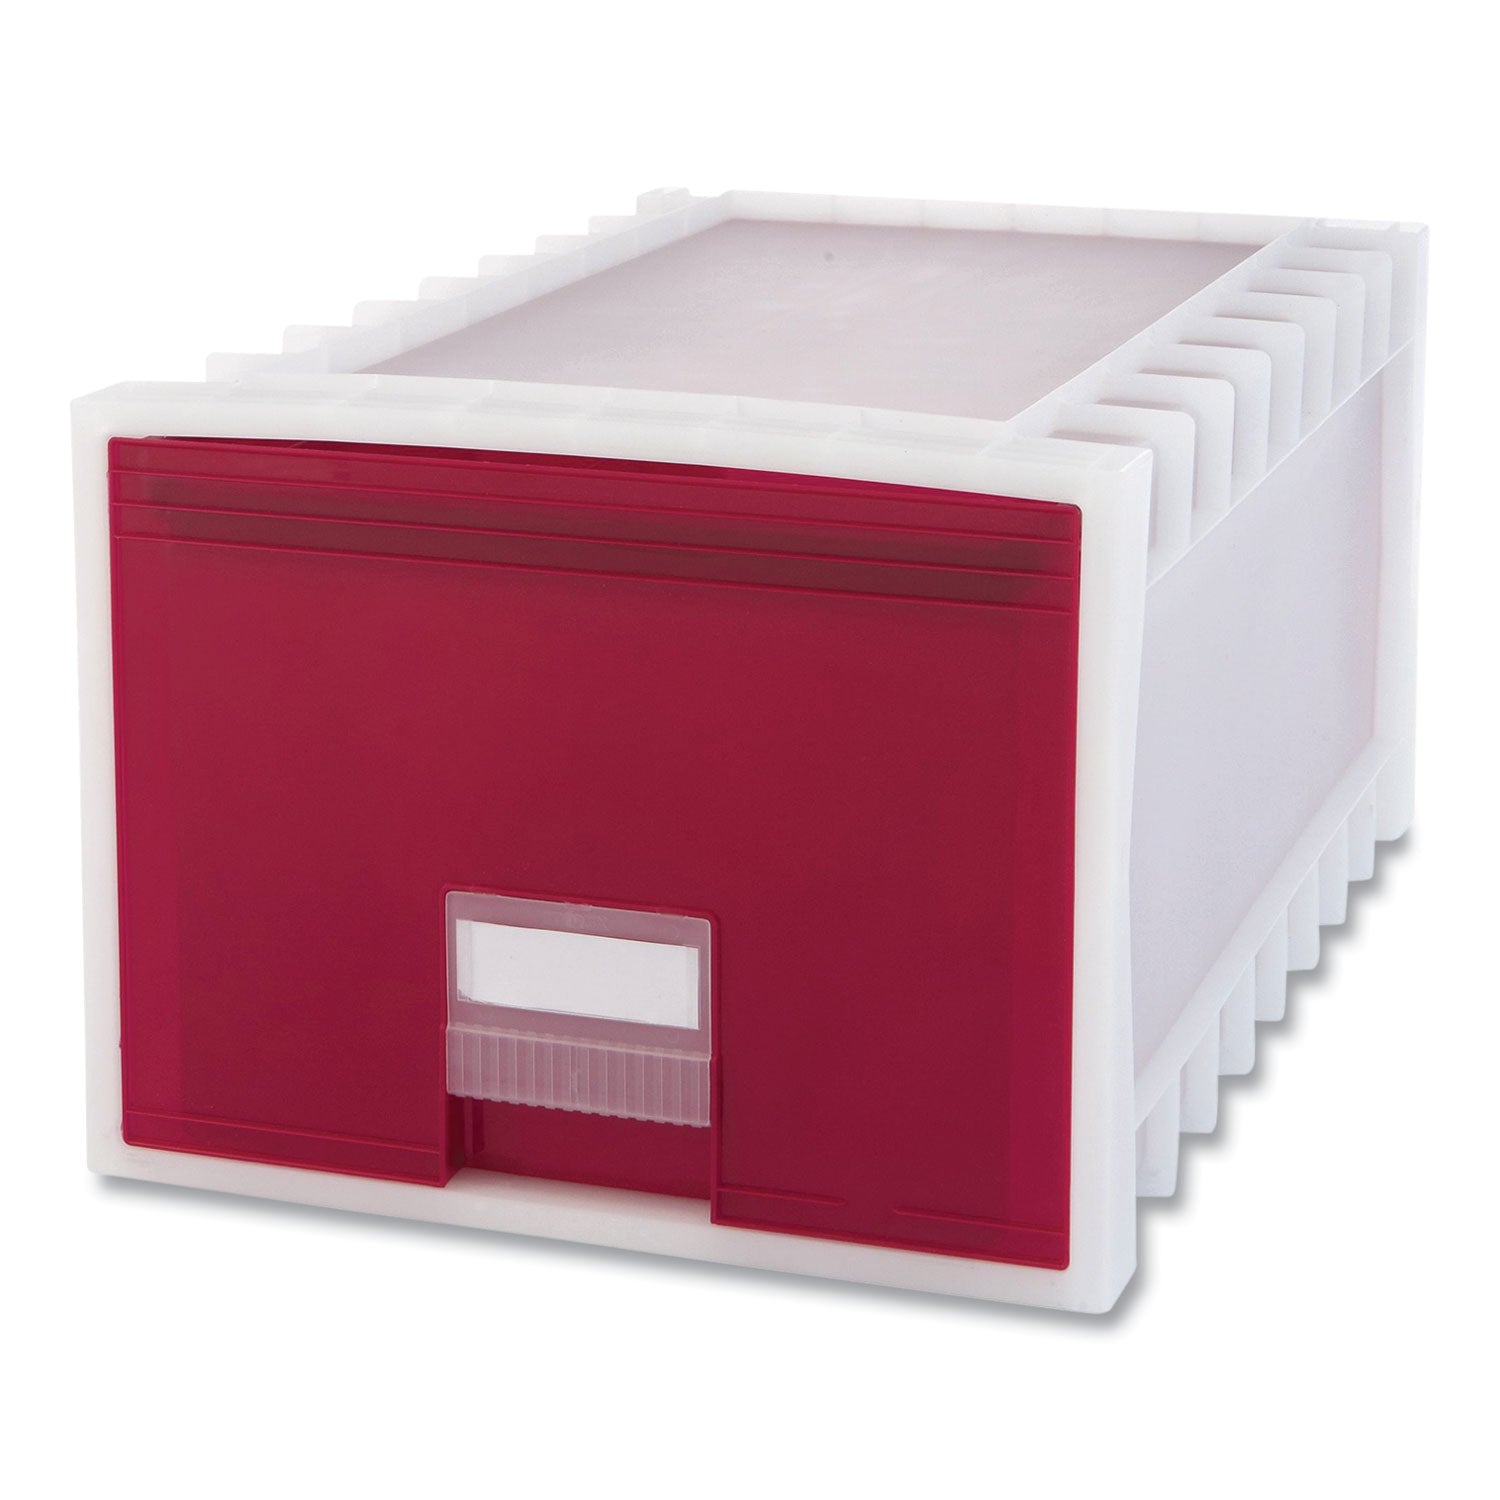 archive-storage-drawers-letter-files-1513-x-2425-x-1138-red-white_stx61105u01c - 1